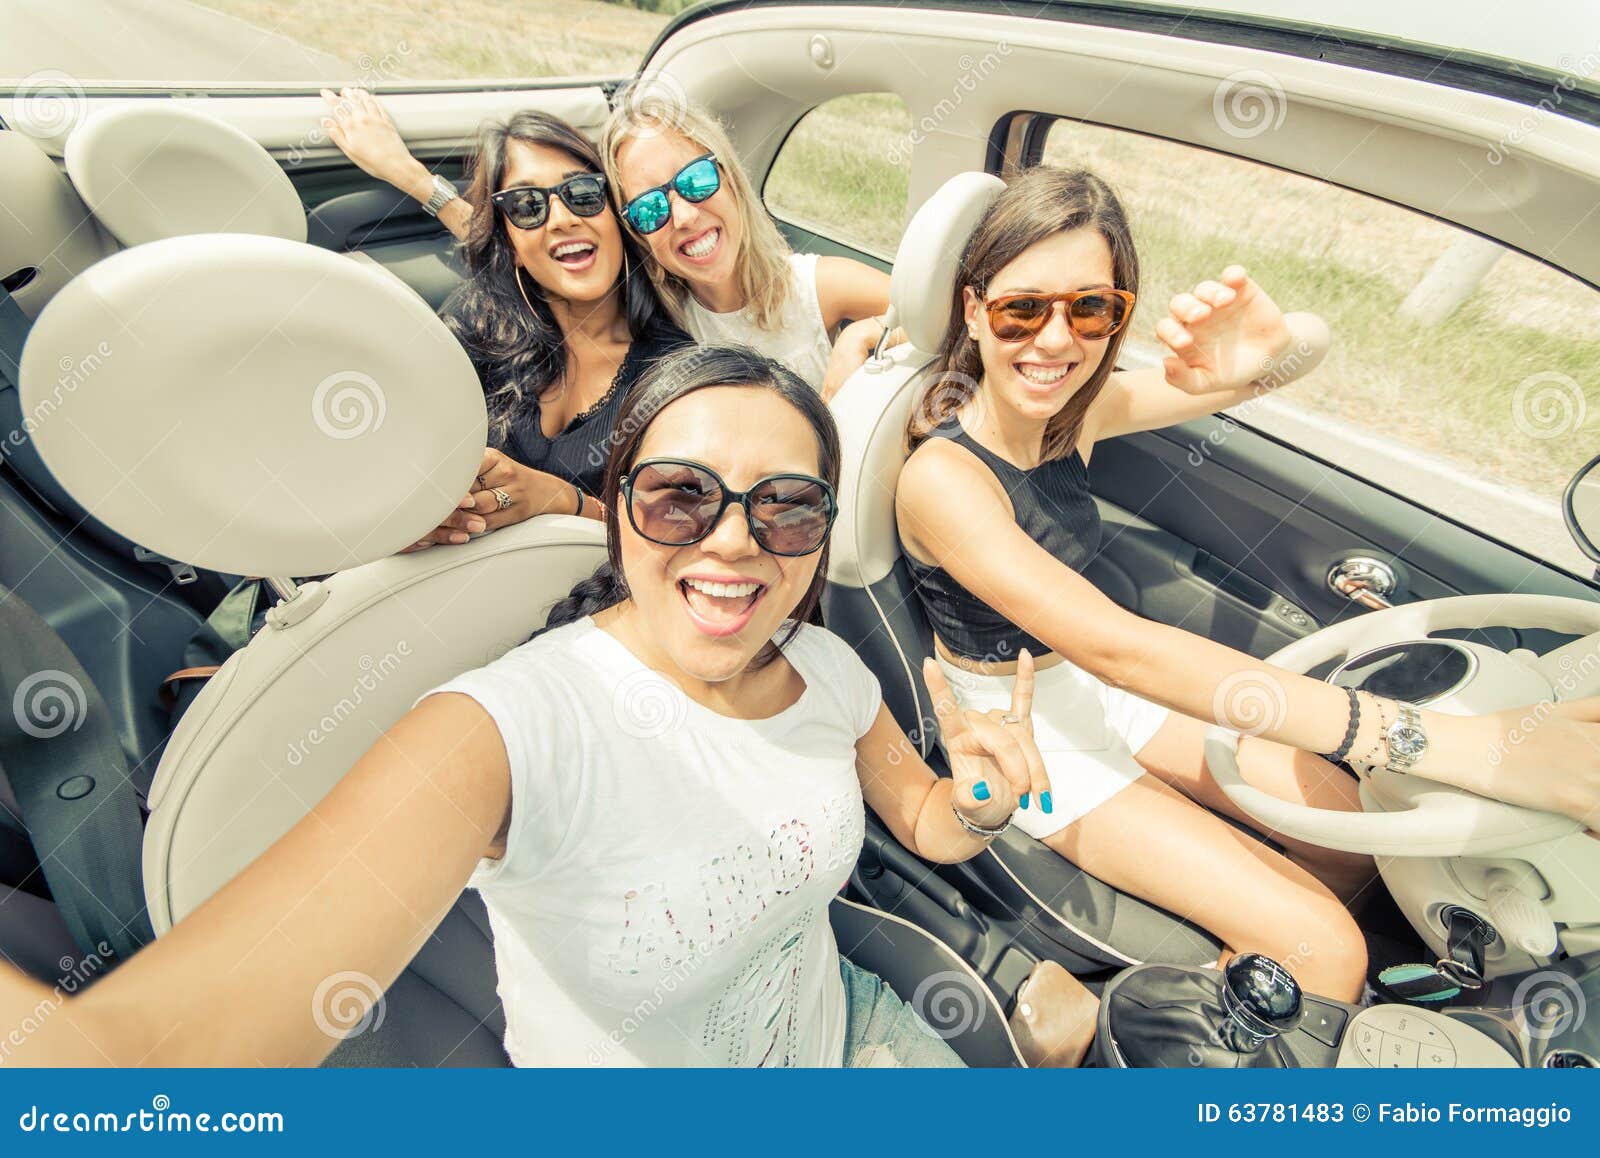 pretty car group selfie hot photo